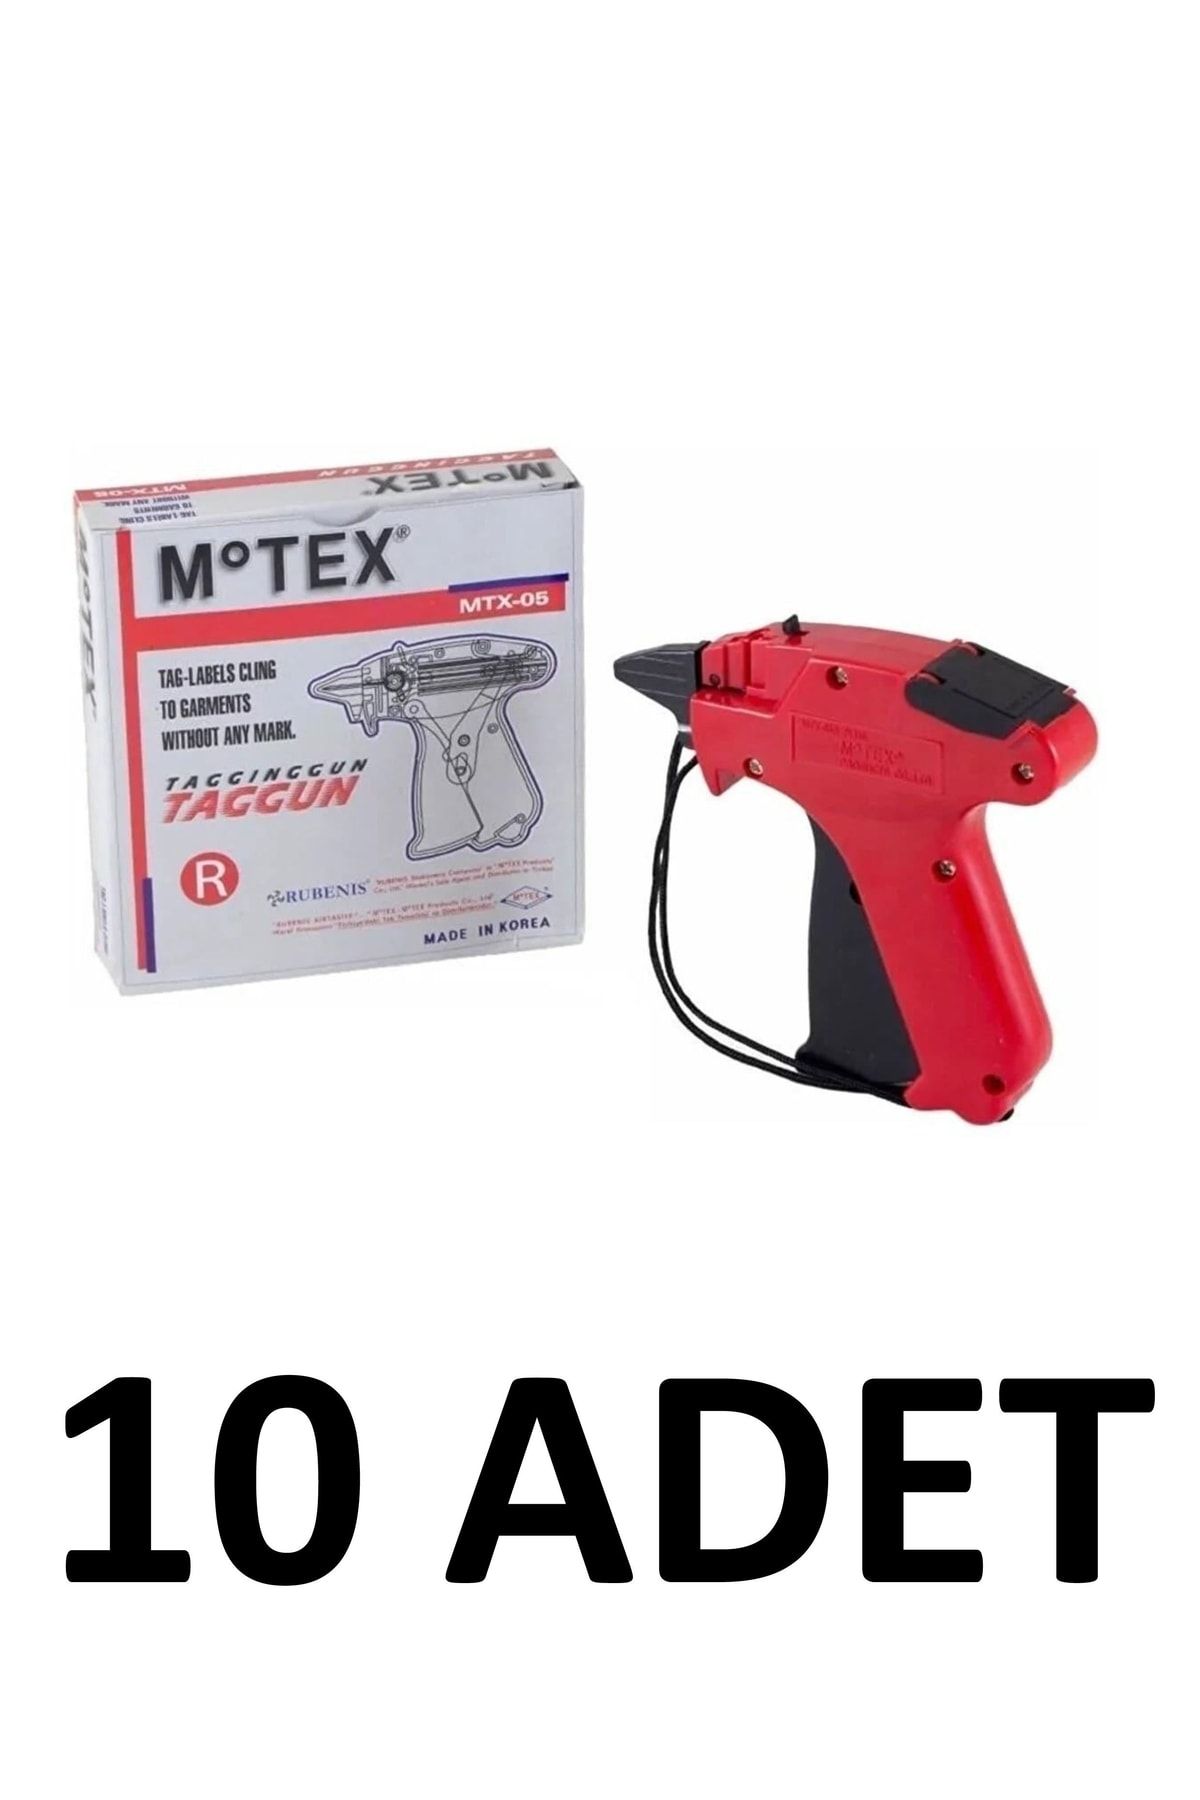 Motex 10 Adet Mtx-05 Etiket Kılçık Tabancası